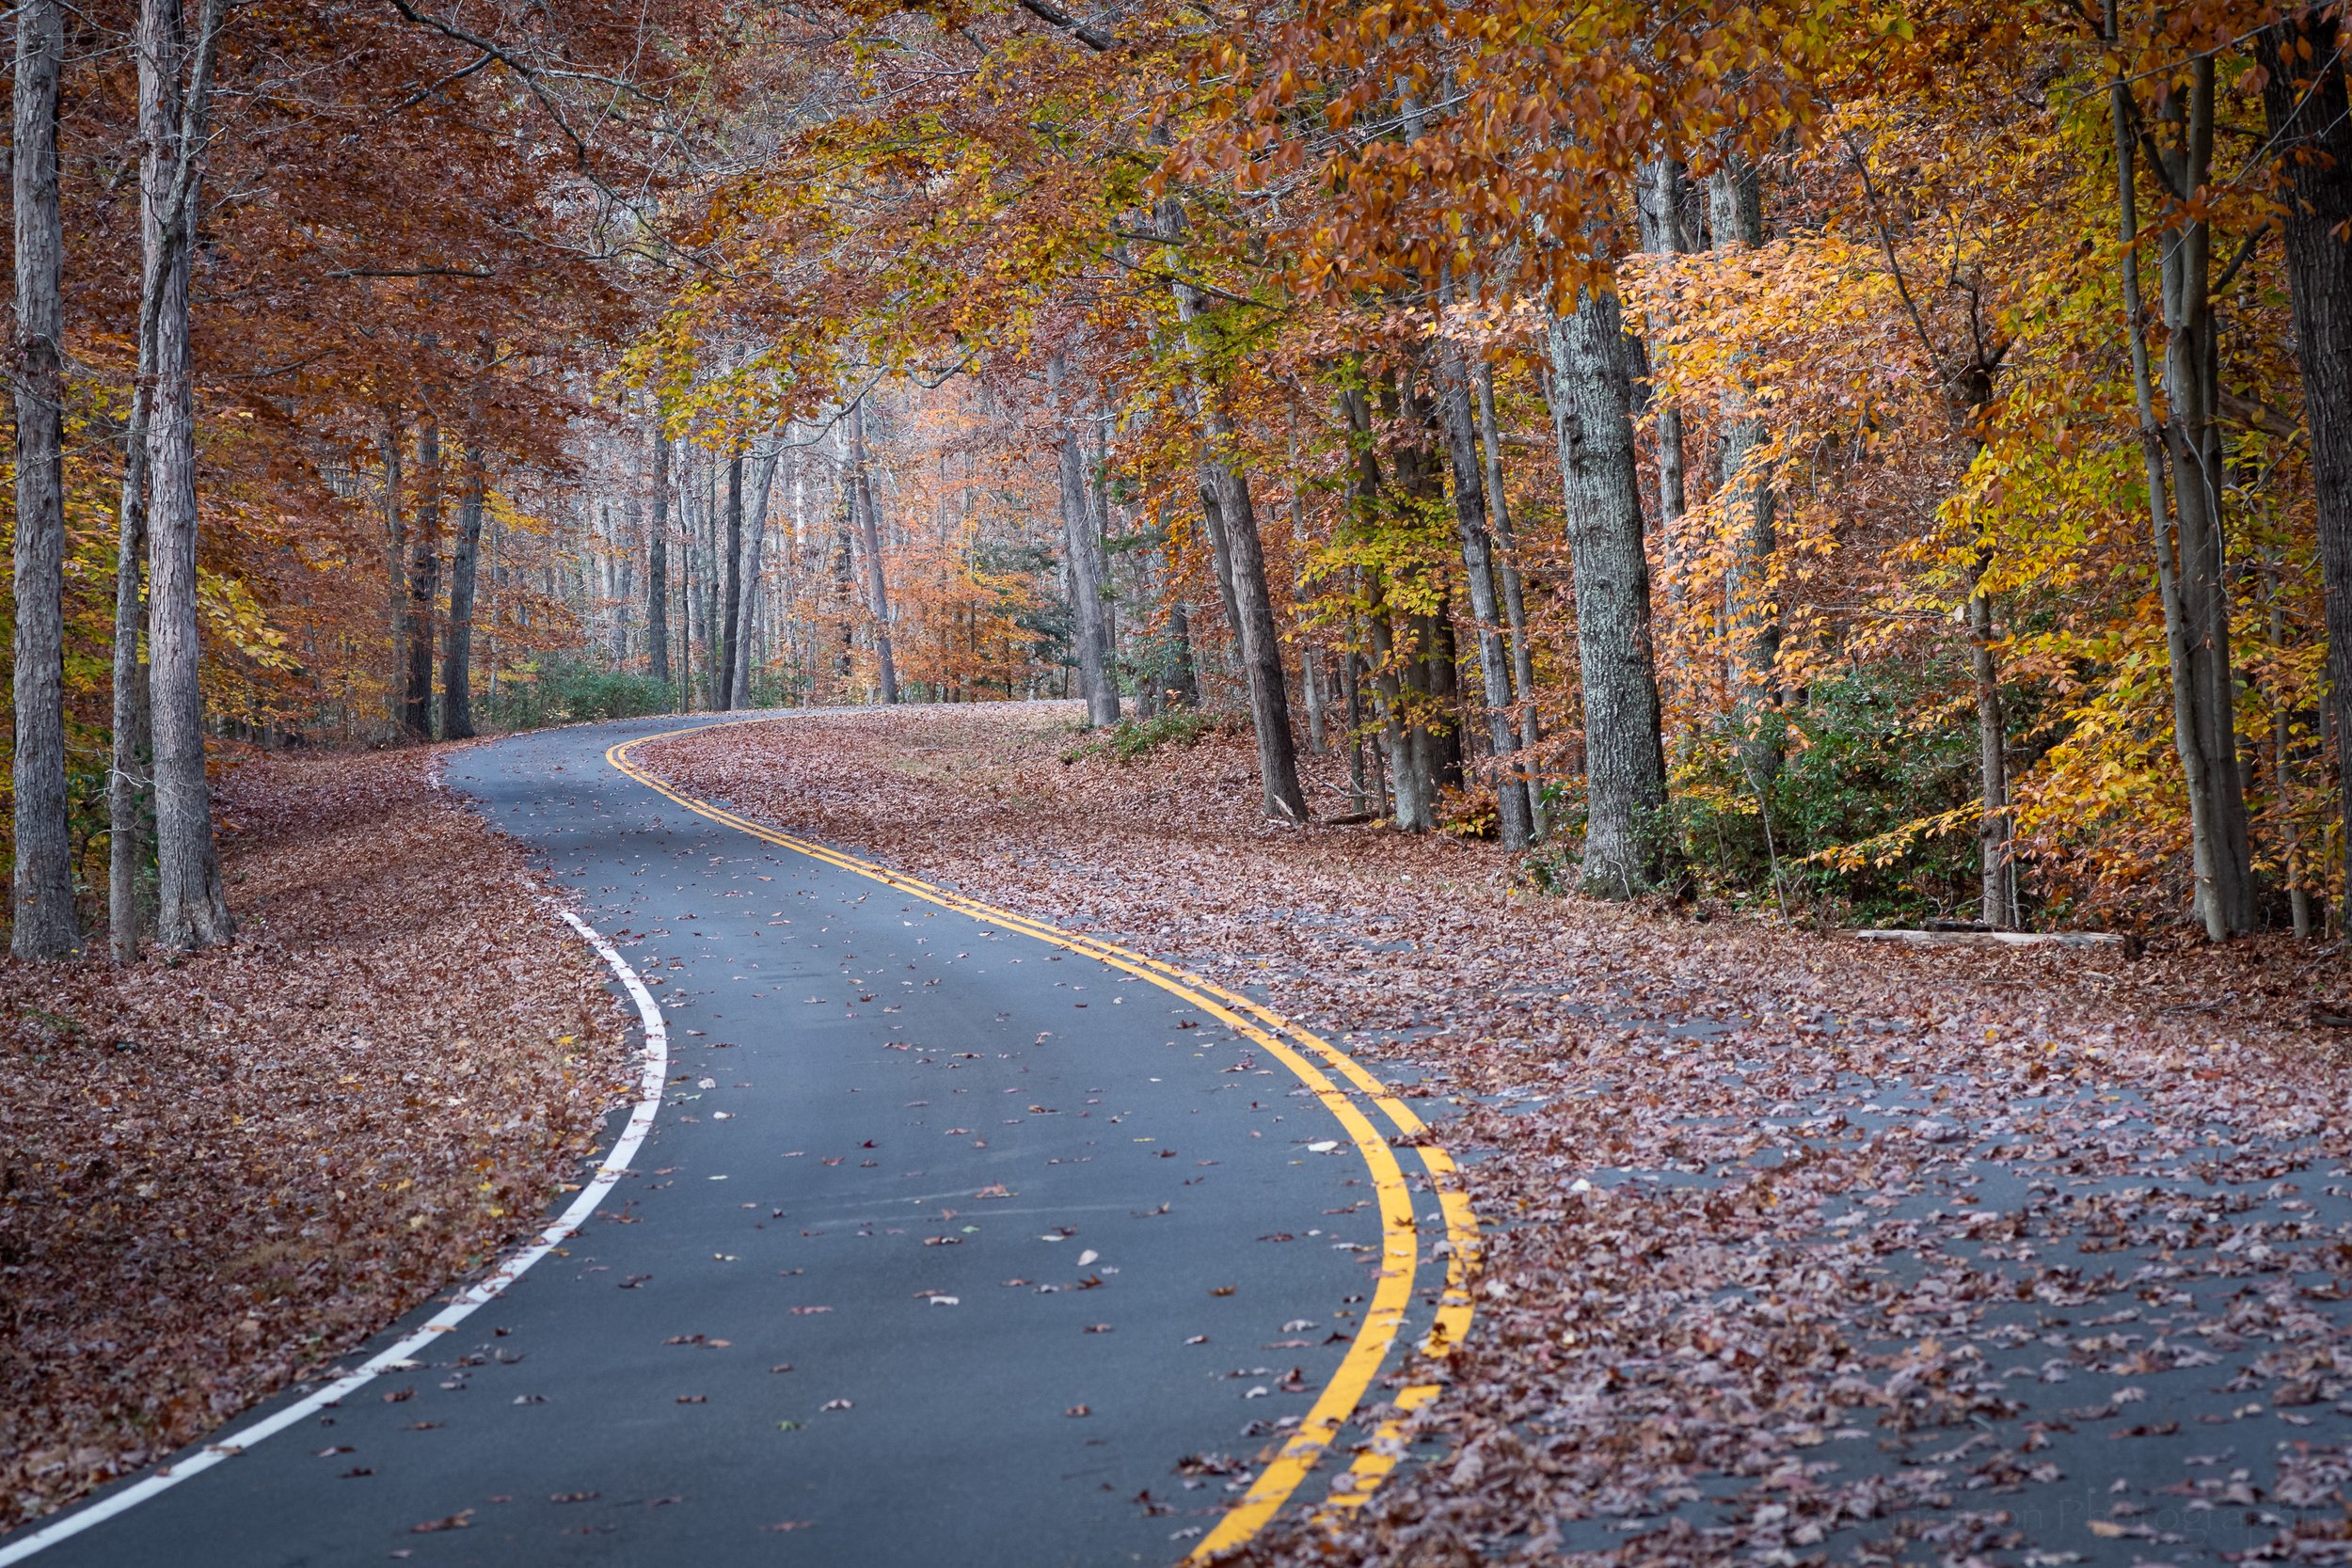 Walking the Scenic Drive in Fall #3